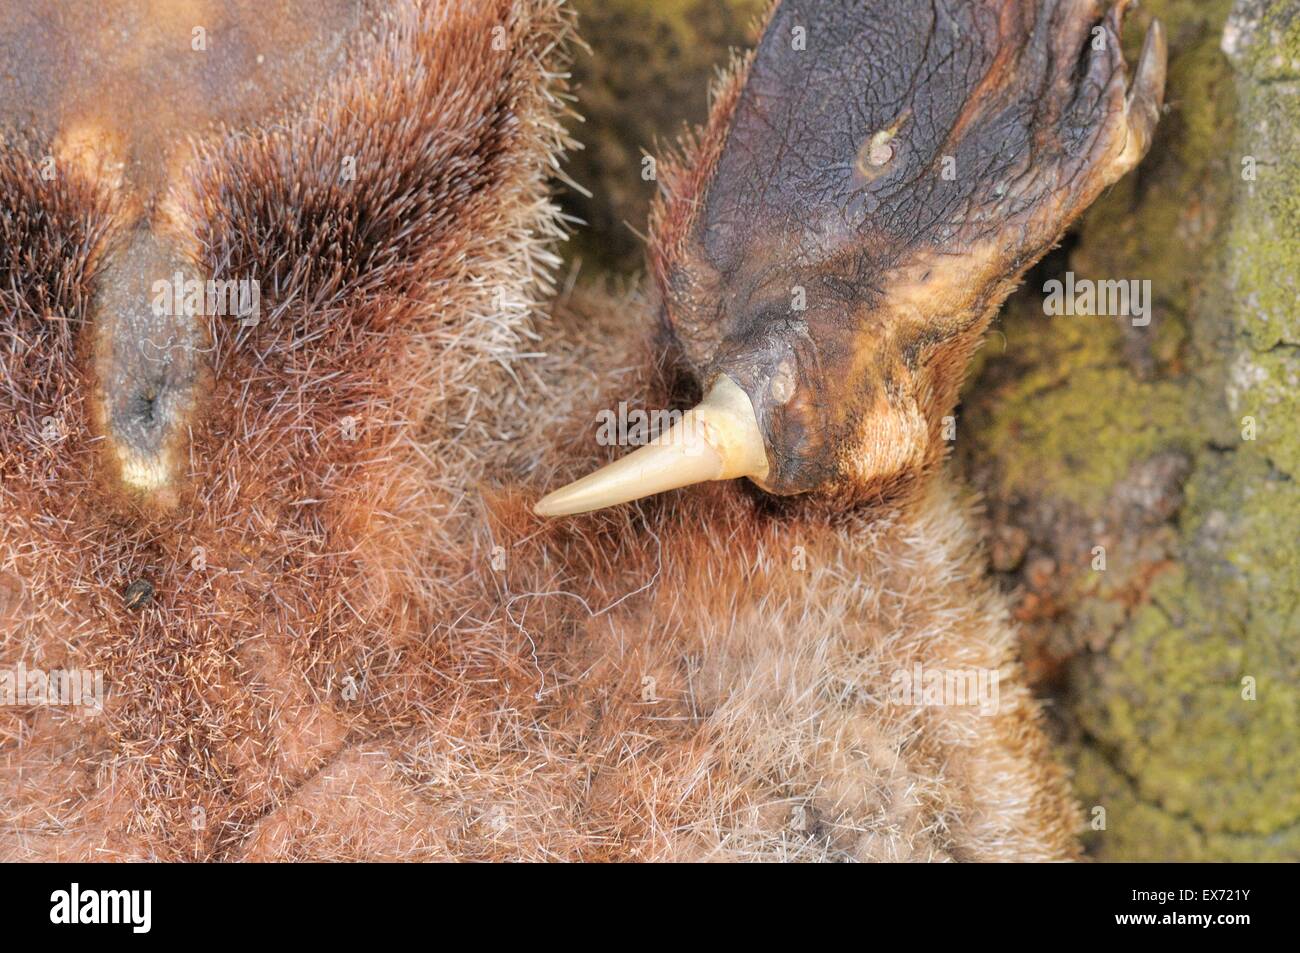 platypus spur sting